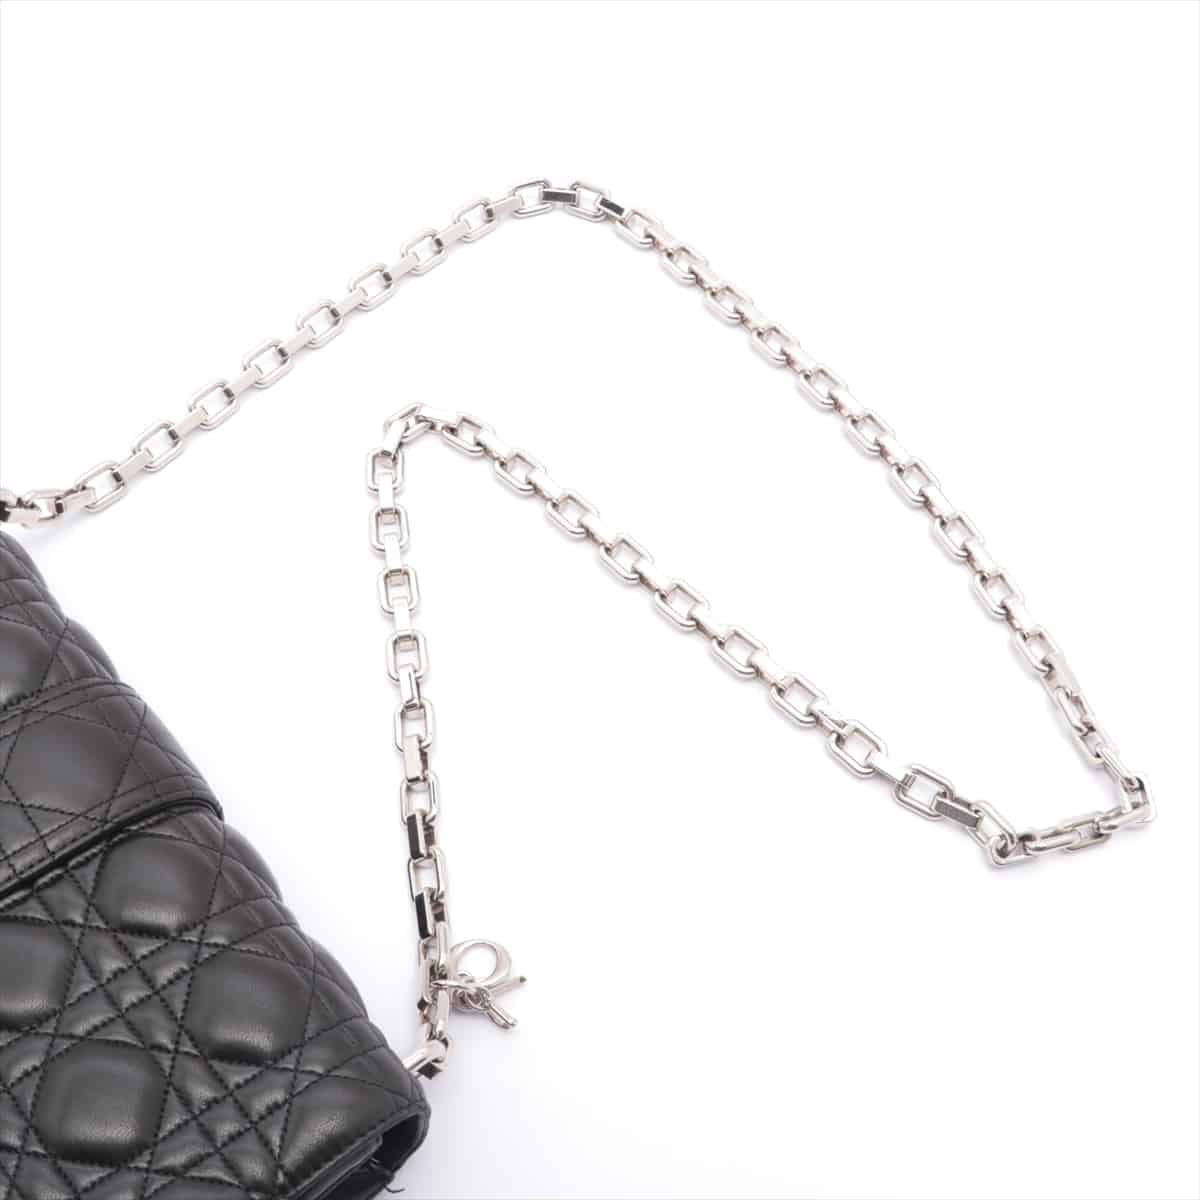 Christian Dior Cannage new lock Leather Chain shoulder bag Black Slight cracks on charm strap